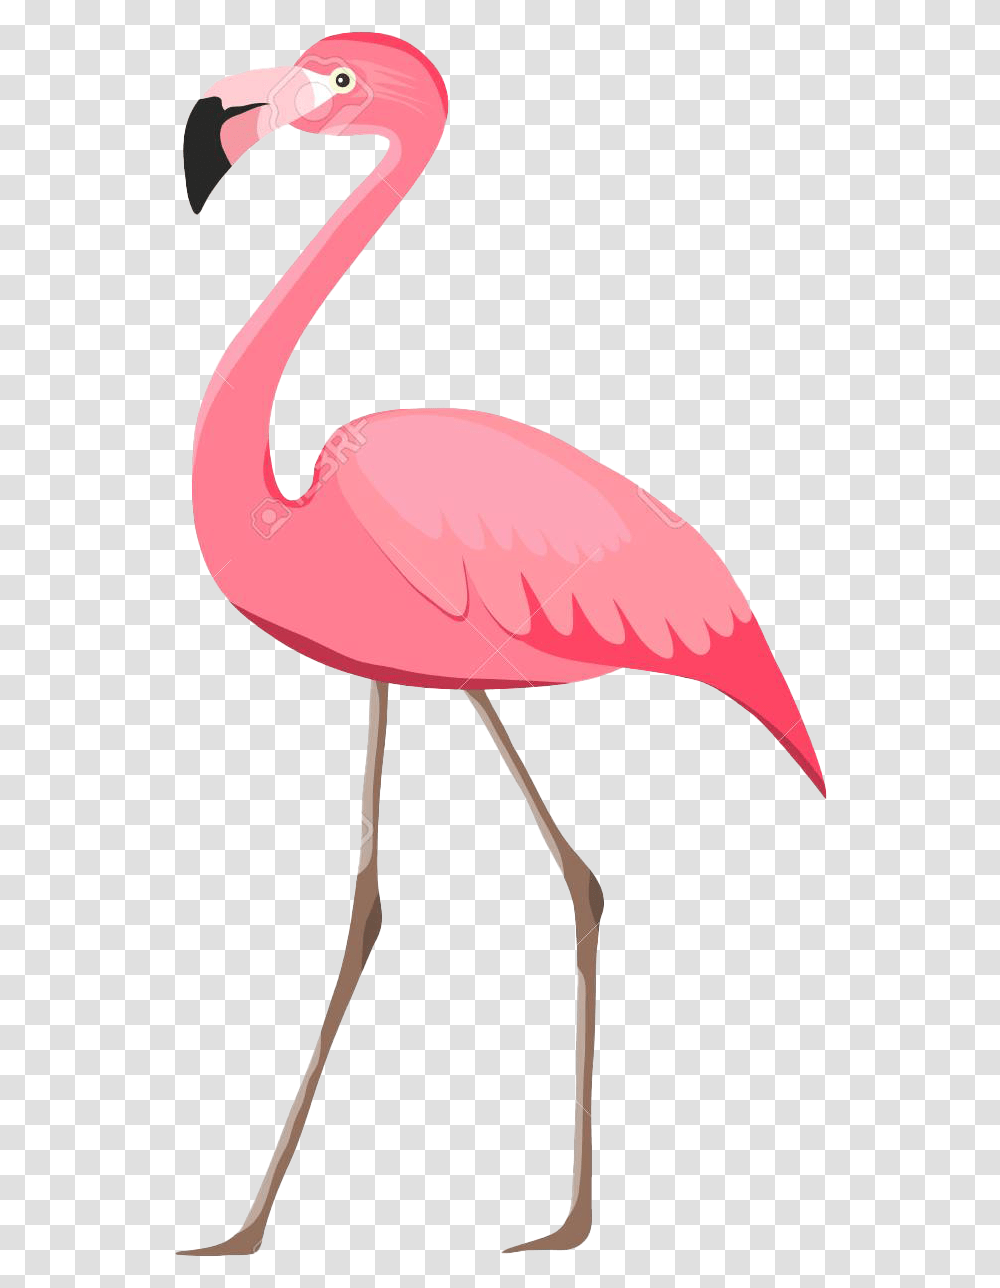 Flamingo Pic Background Flamingo Imagenes, Bird, Animal, Lamp, Beak Transparent Png